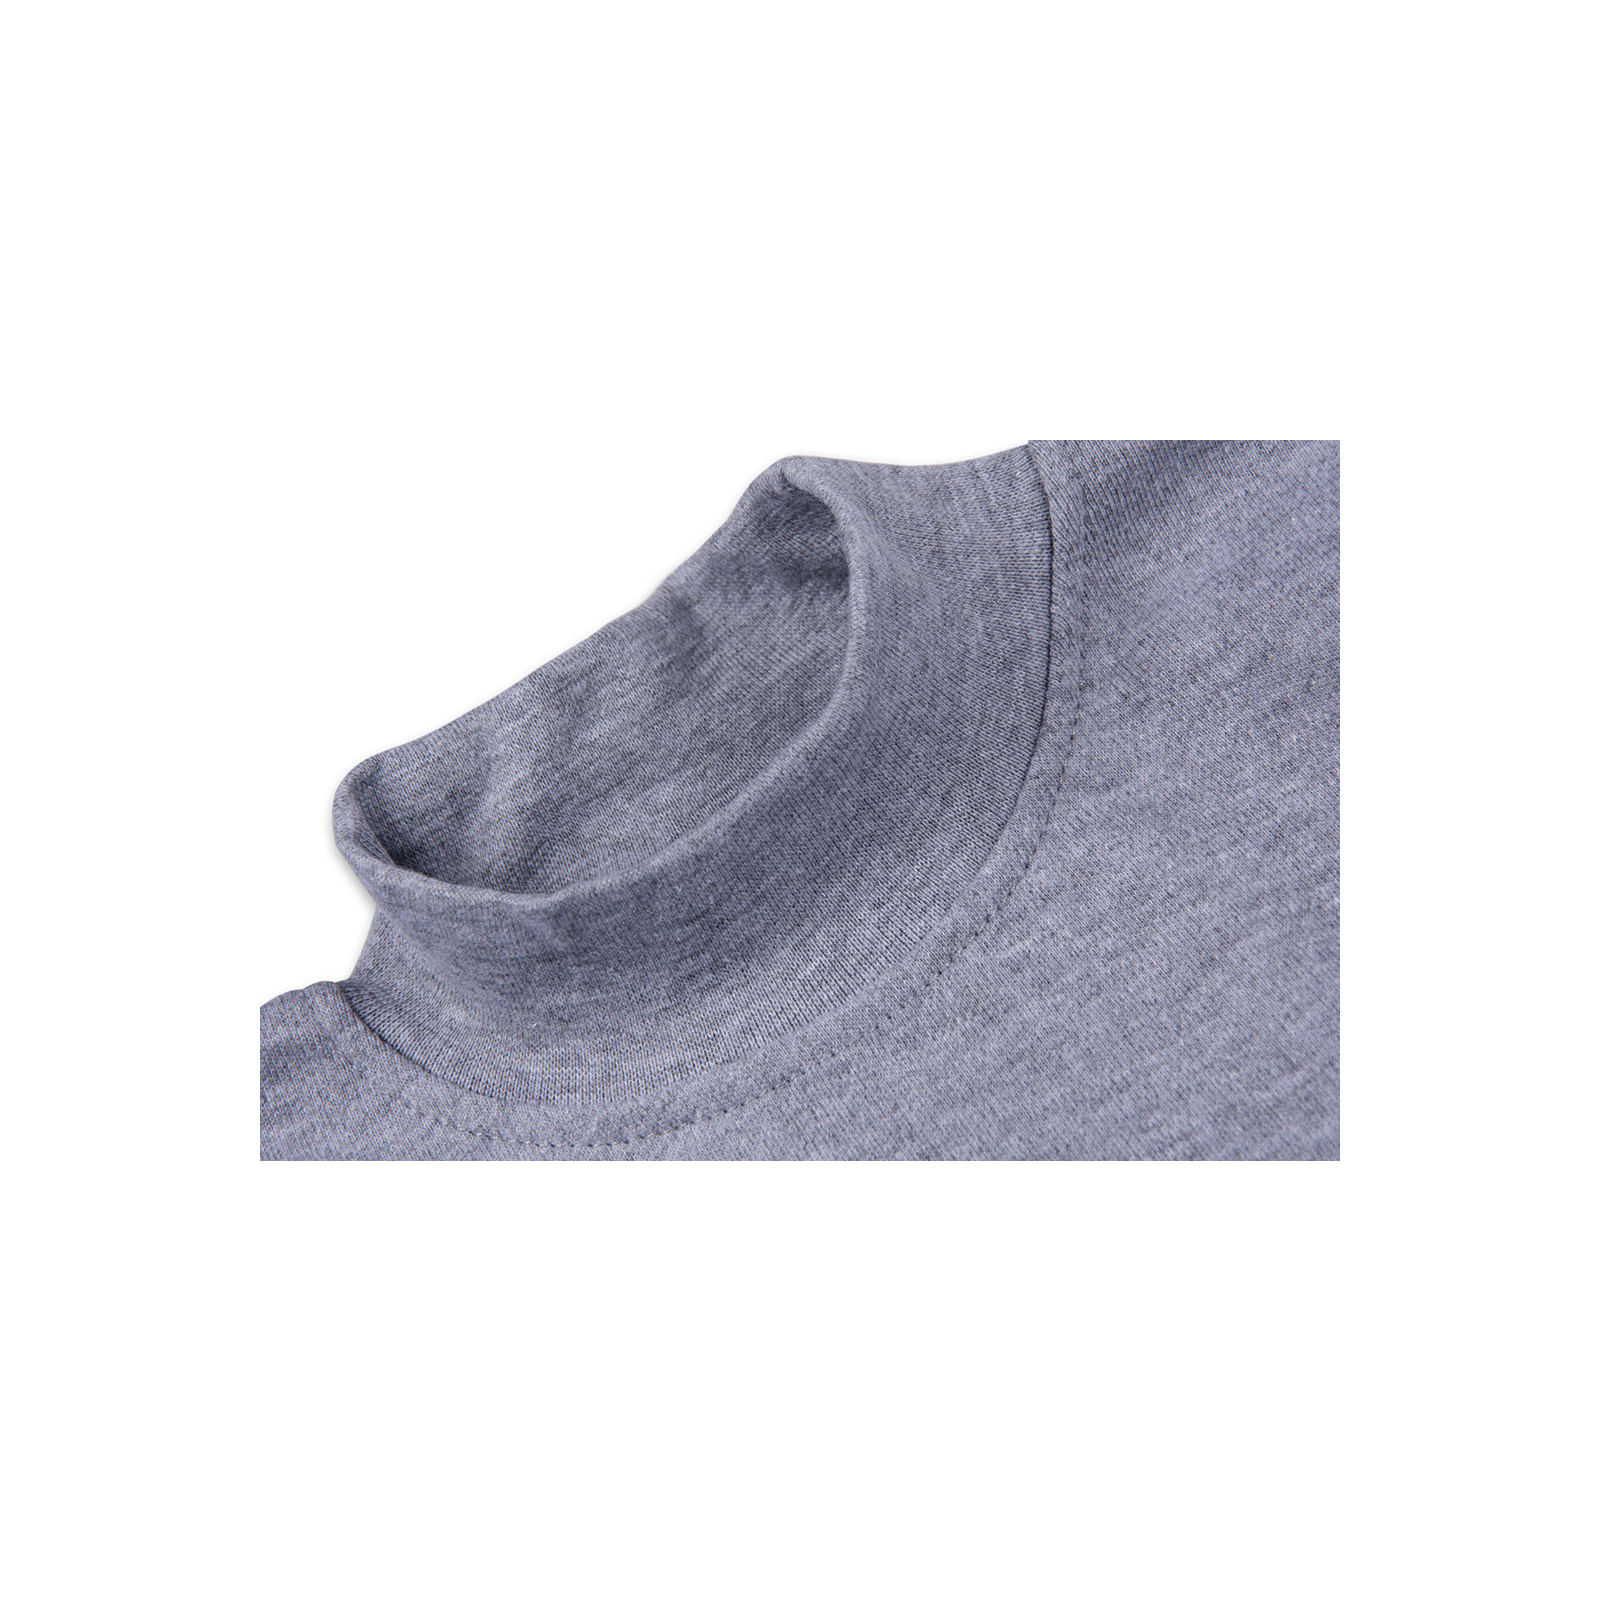 Кофта Lovetti водолазка серая меланжевая (1011-92-gray) изображение 3